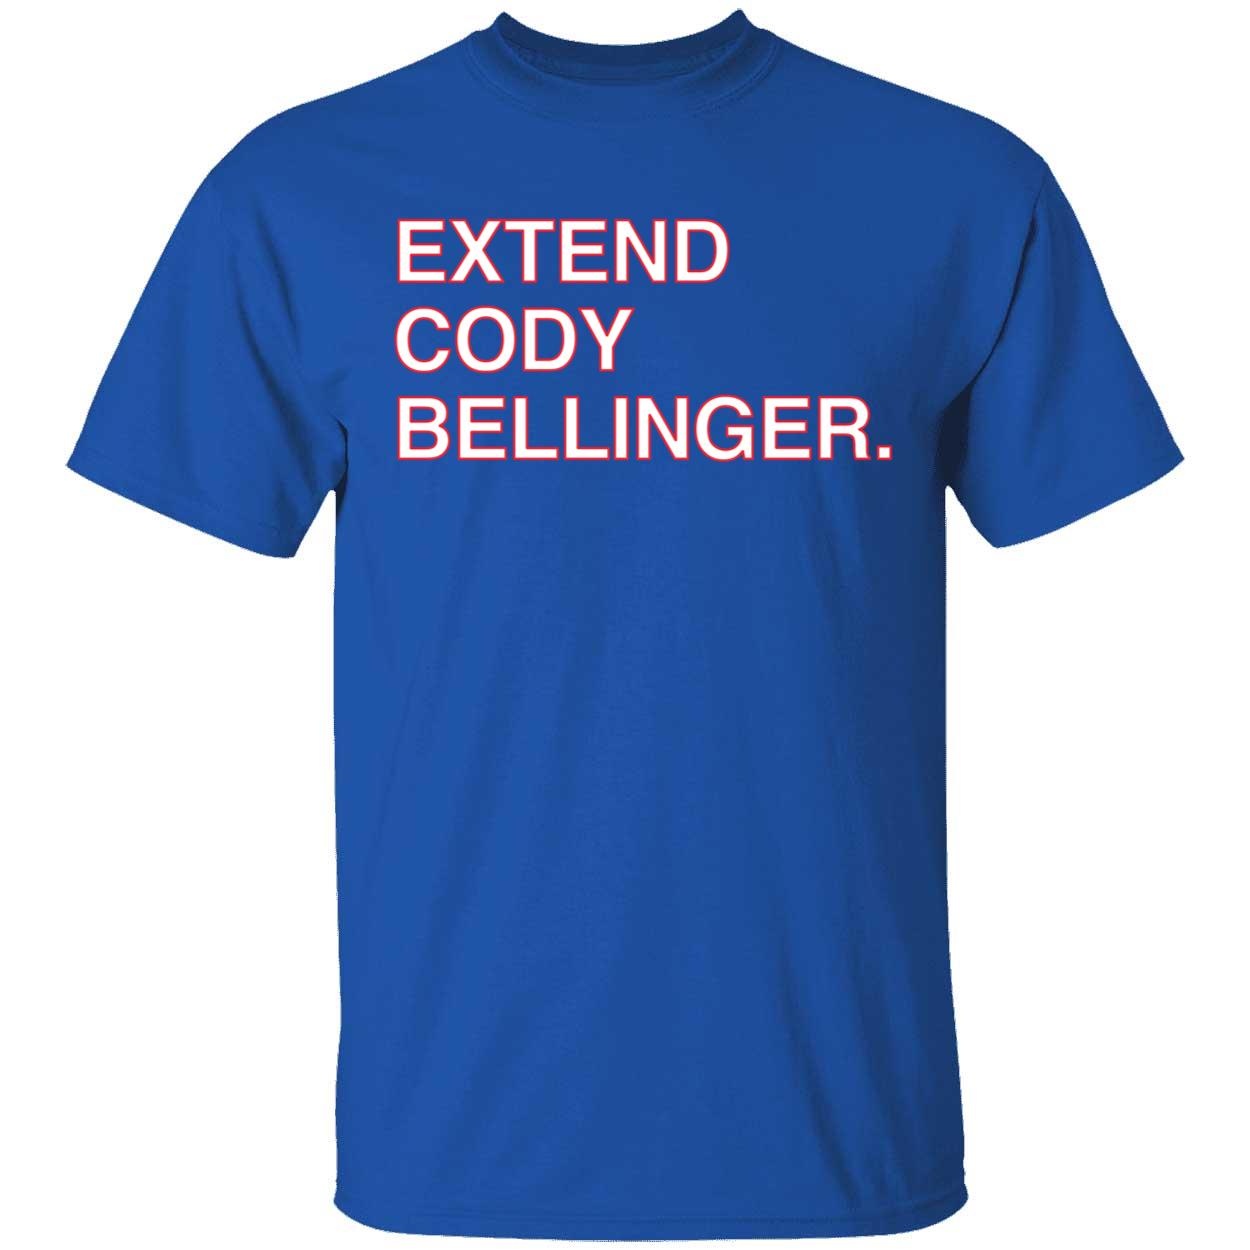 Buy Extend Cody Bellinger Shirt For Free Shipping CUSTOM XMAS